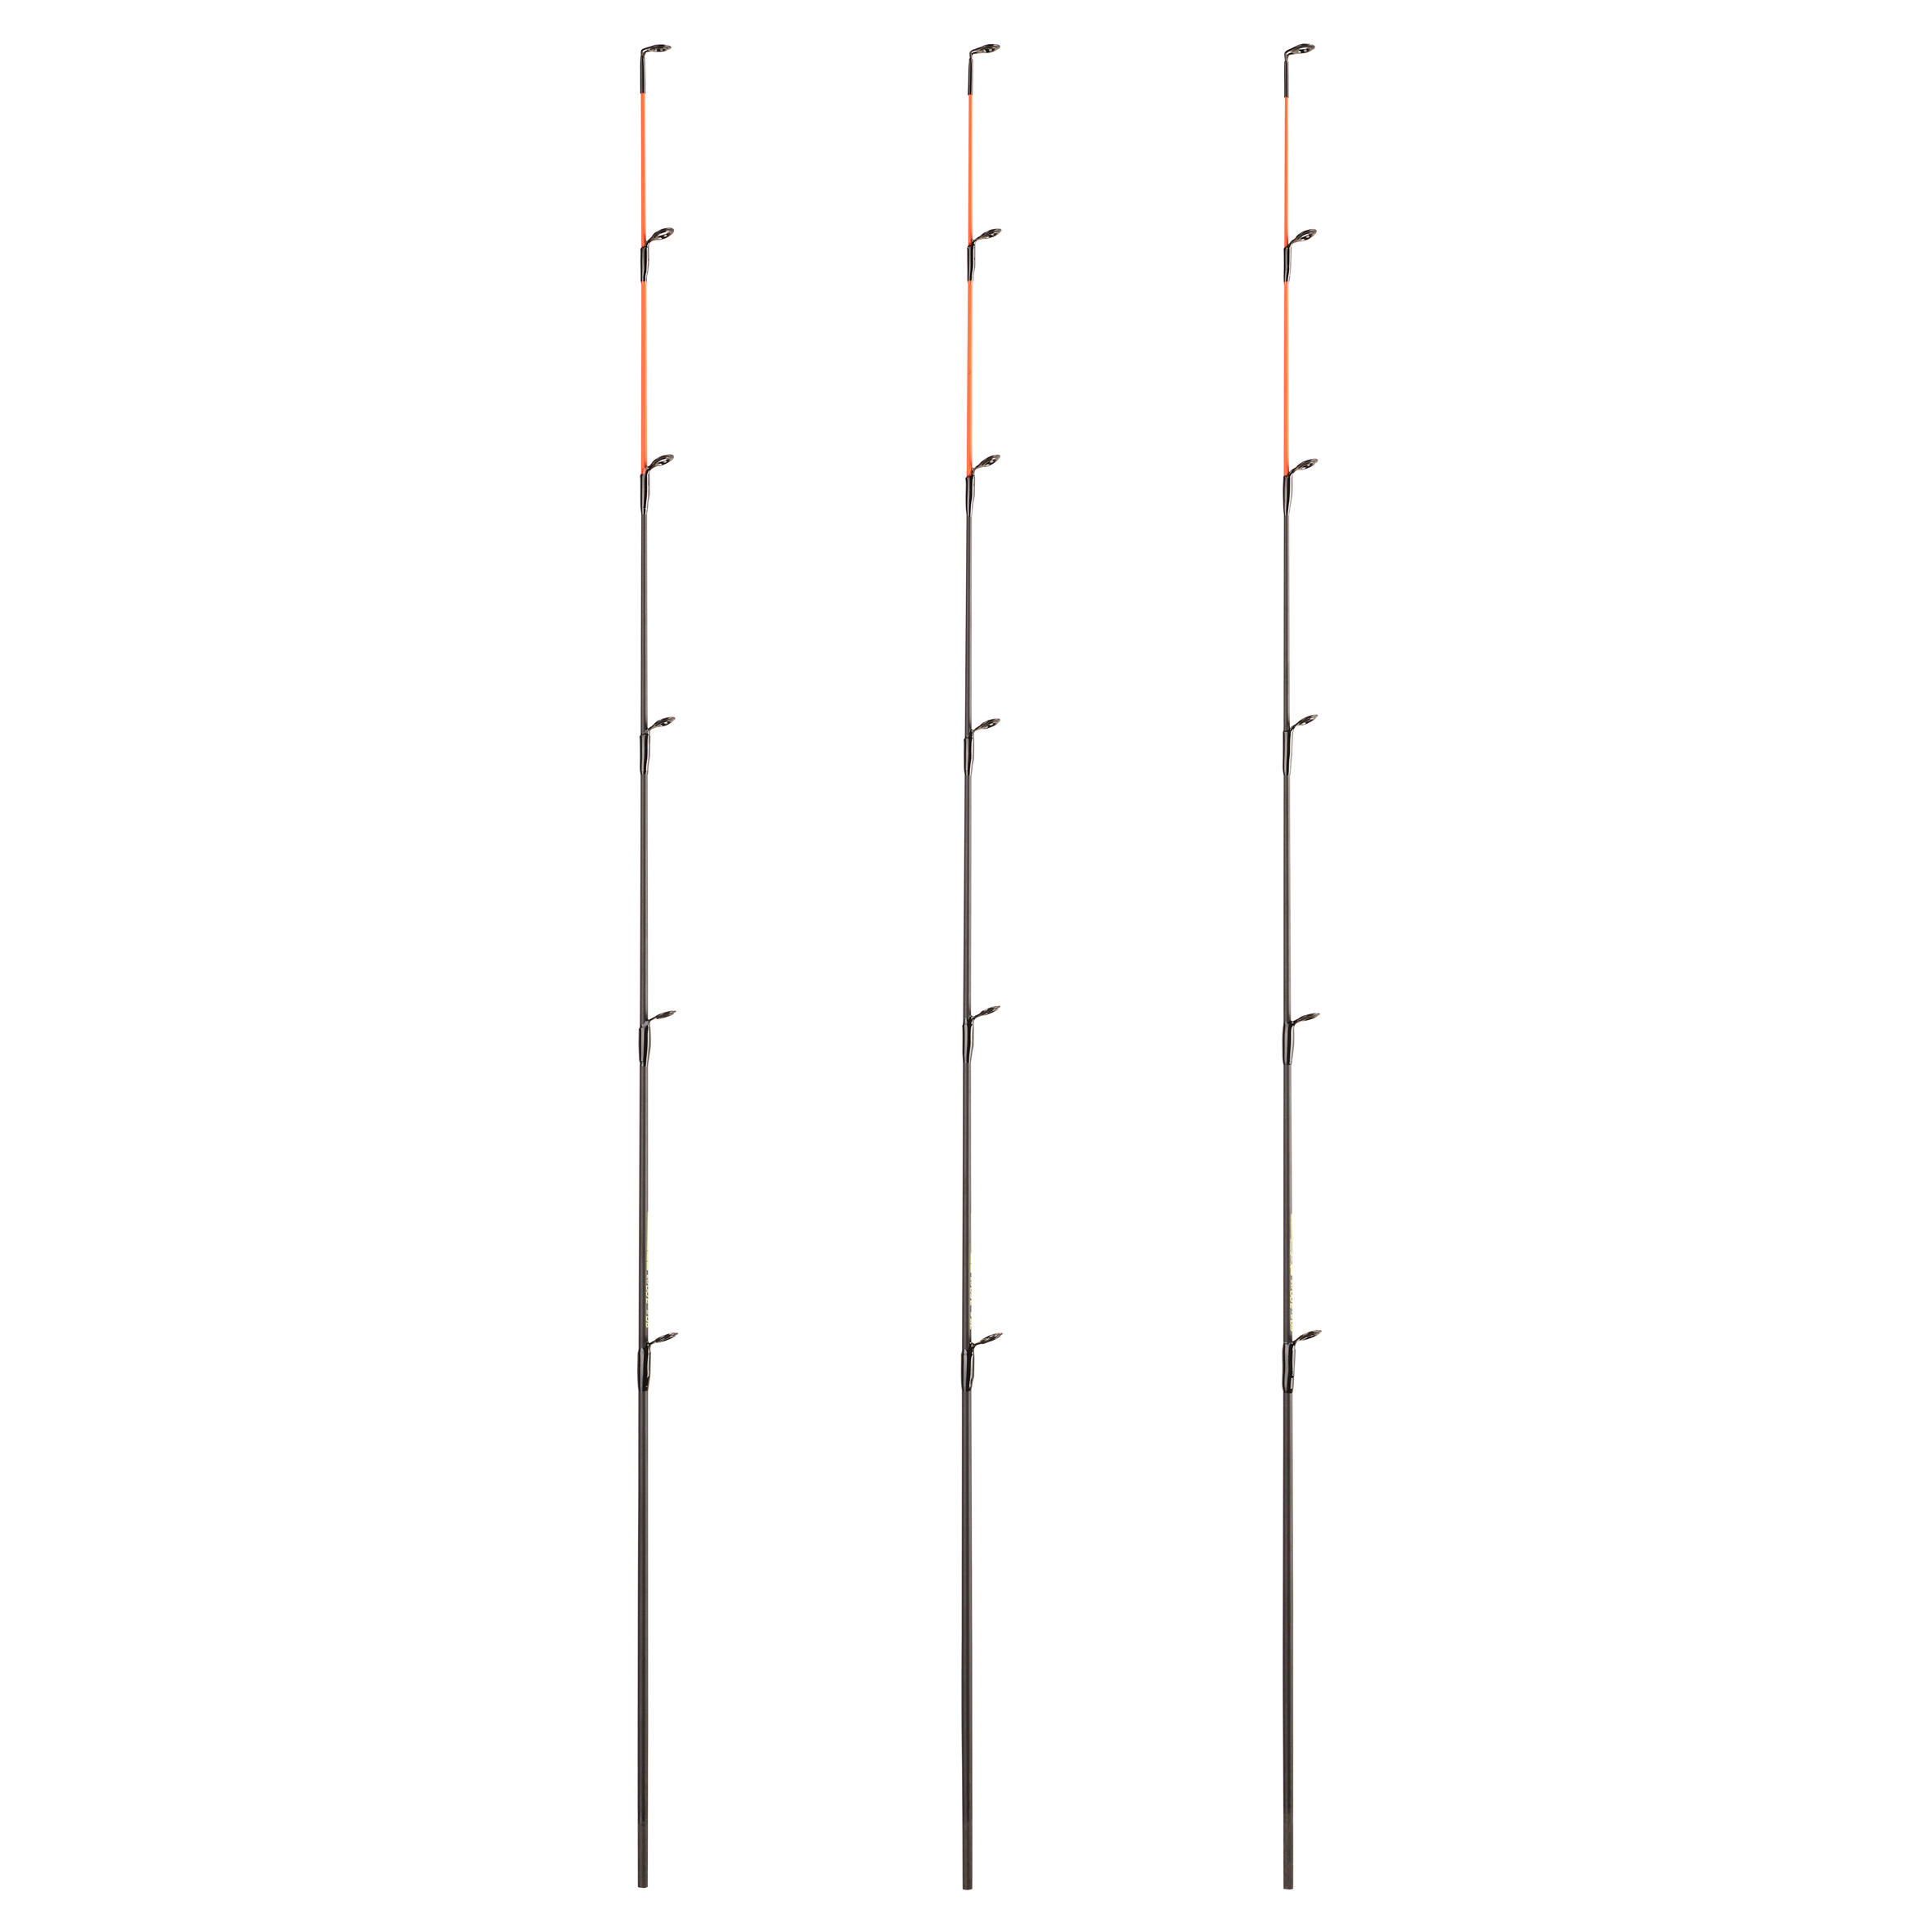 Feeder carp fishing rod SENSITIV 500 carp 40 g-100 g in size 3.60 m. 11/16